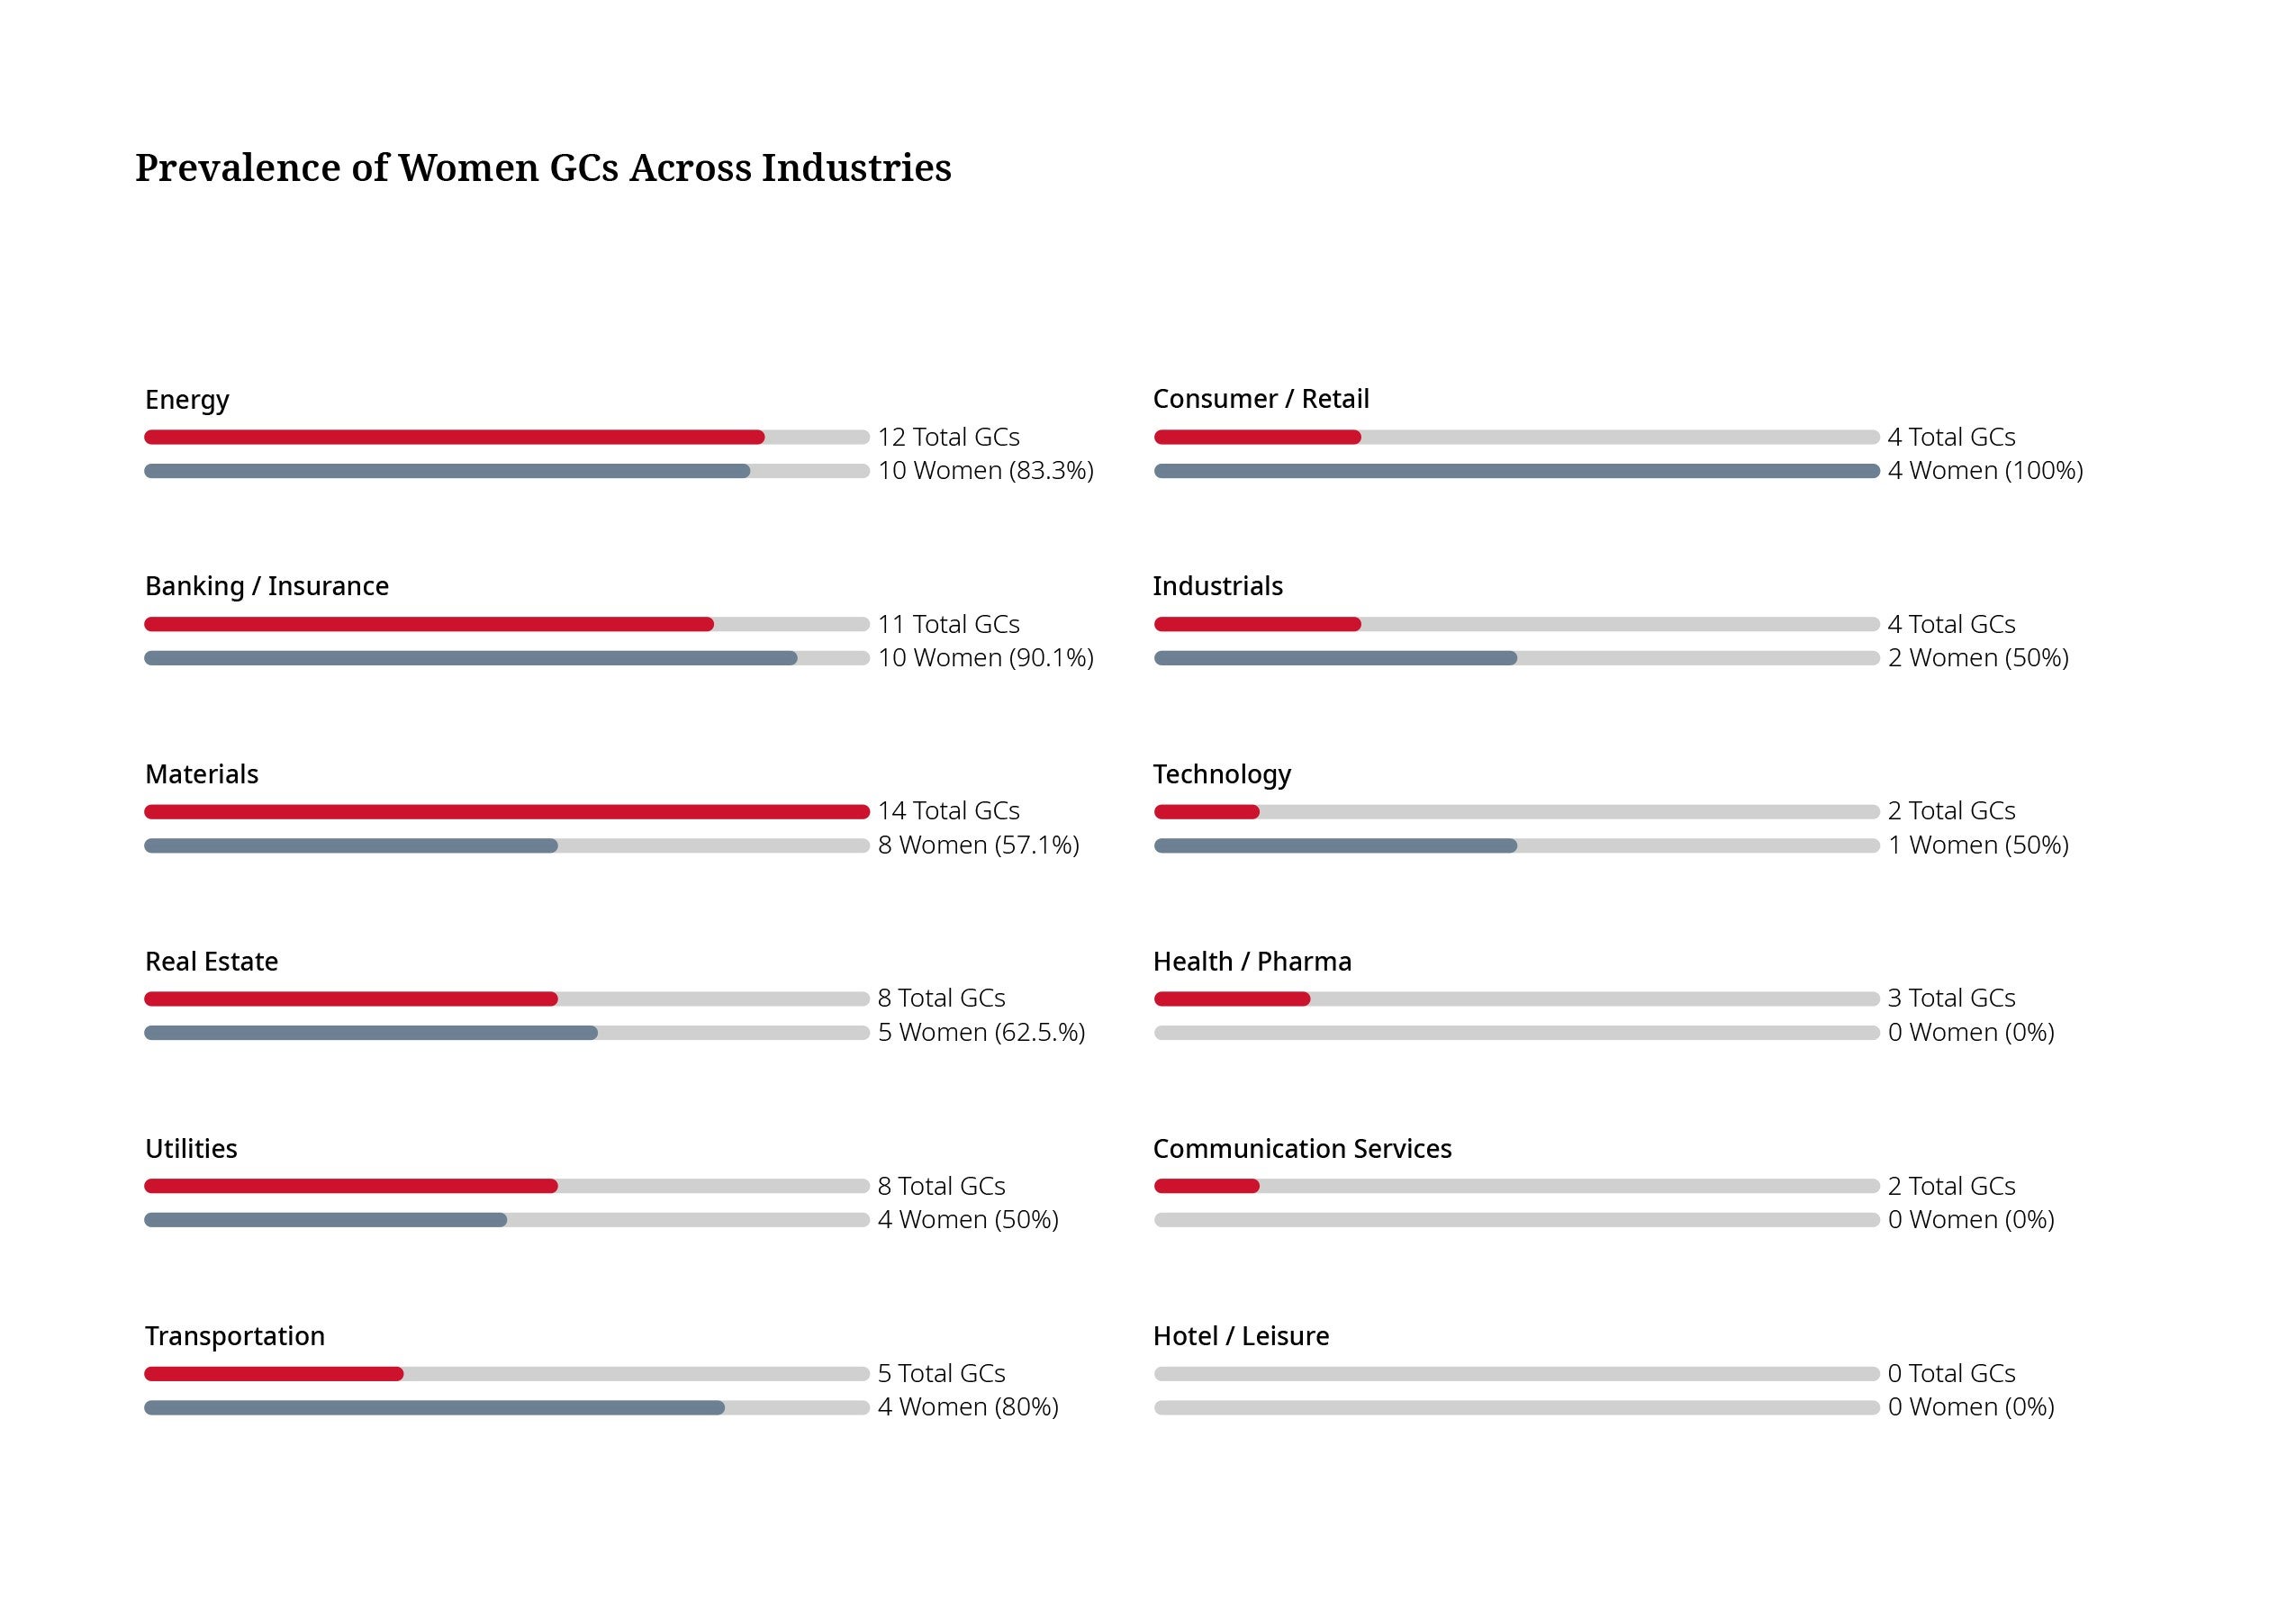 Prevalence of Women GCs across industries